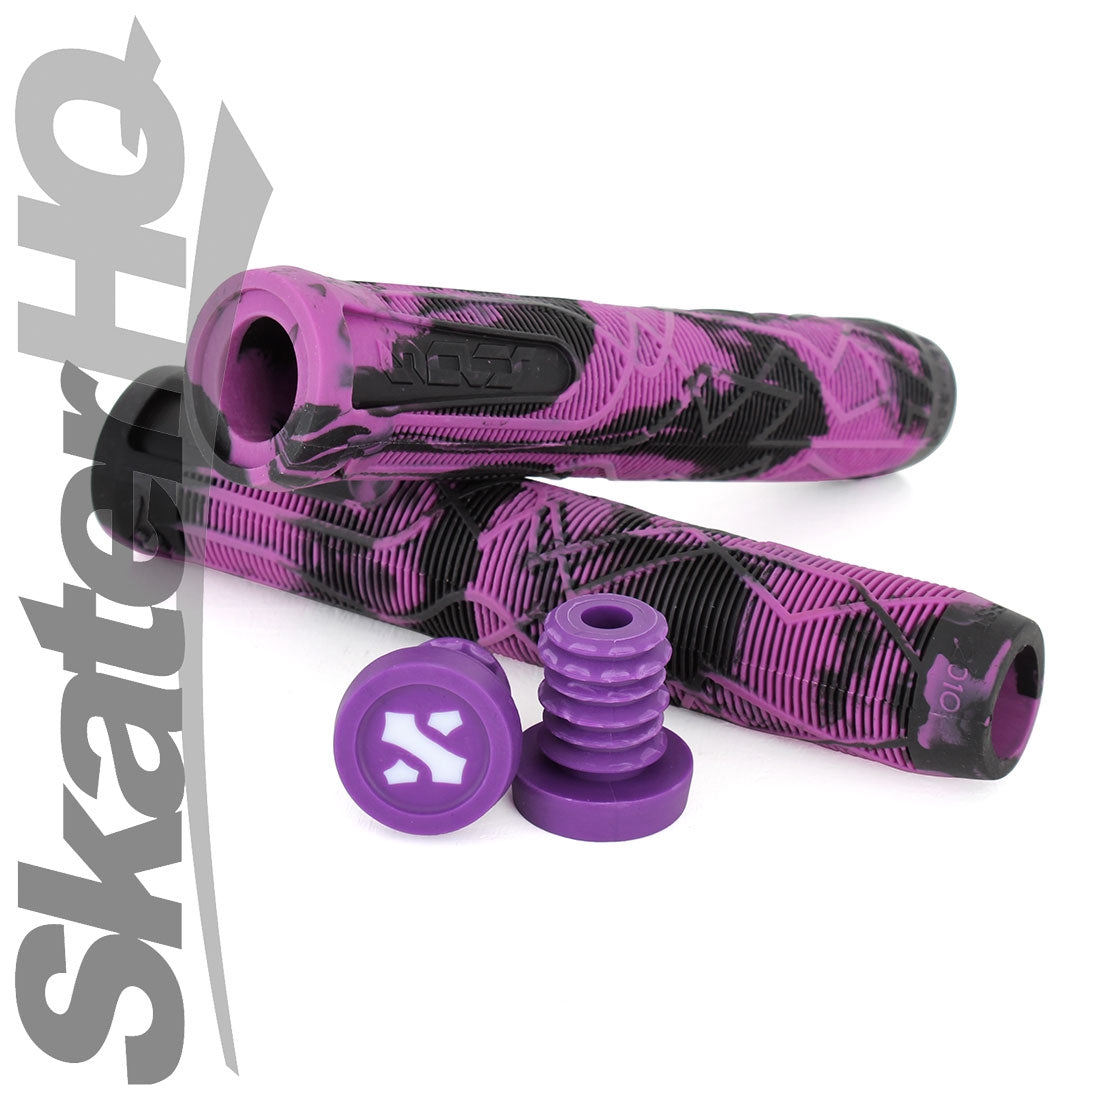 Sacrifice Spy Grips - Purple/Black Swirl Scooter Grips